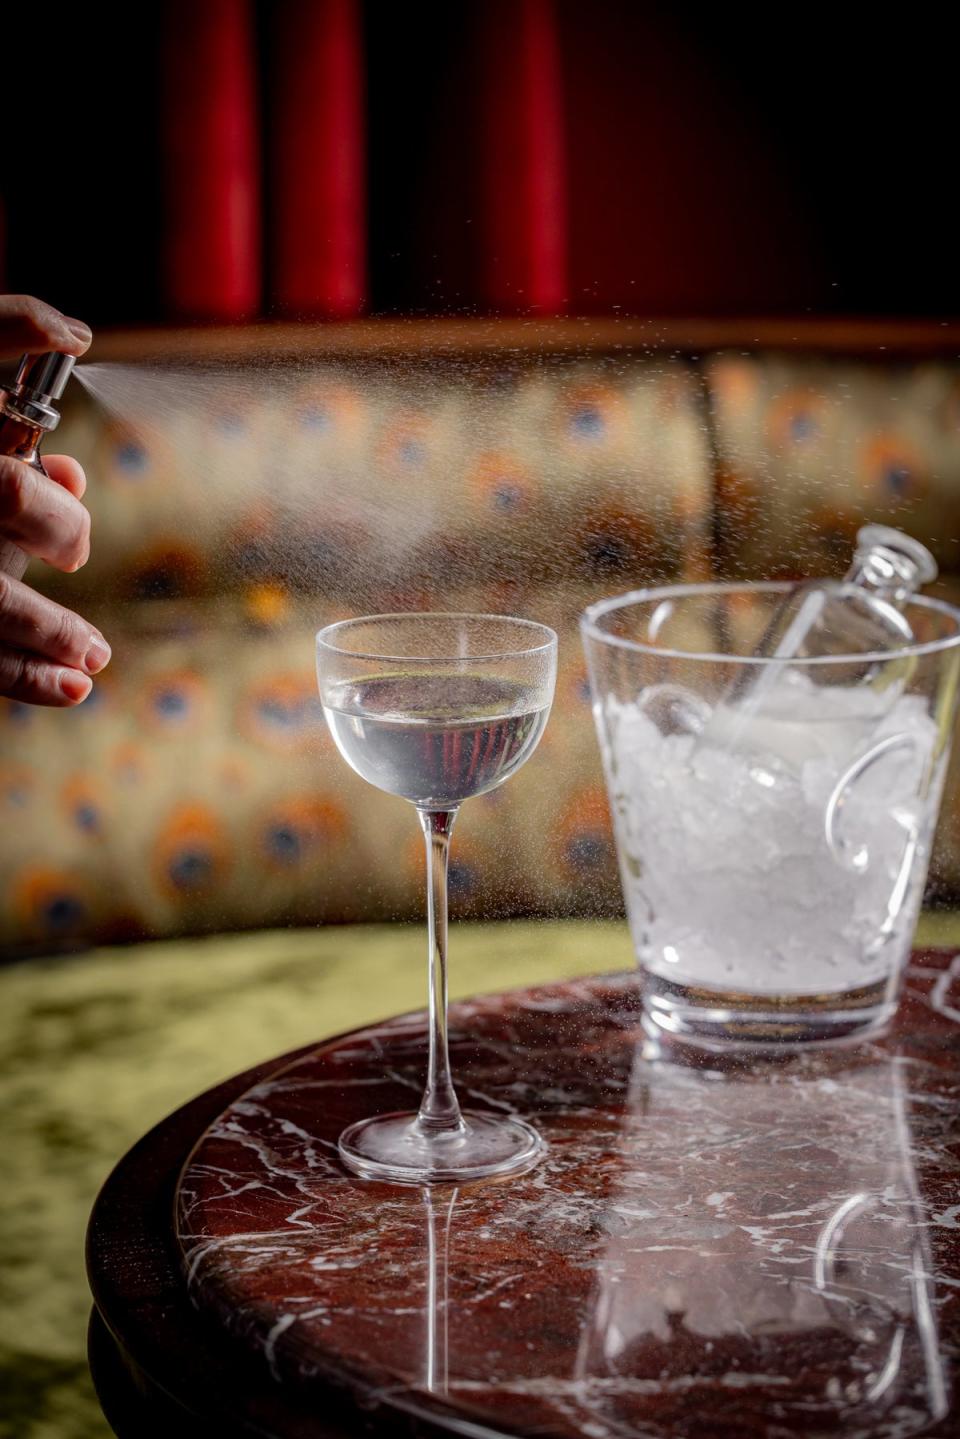 A martini sprayed with eau de vie (Justin De Souza)